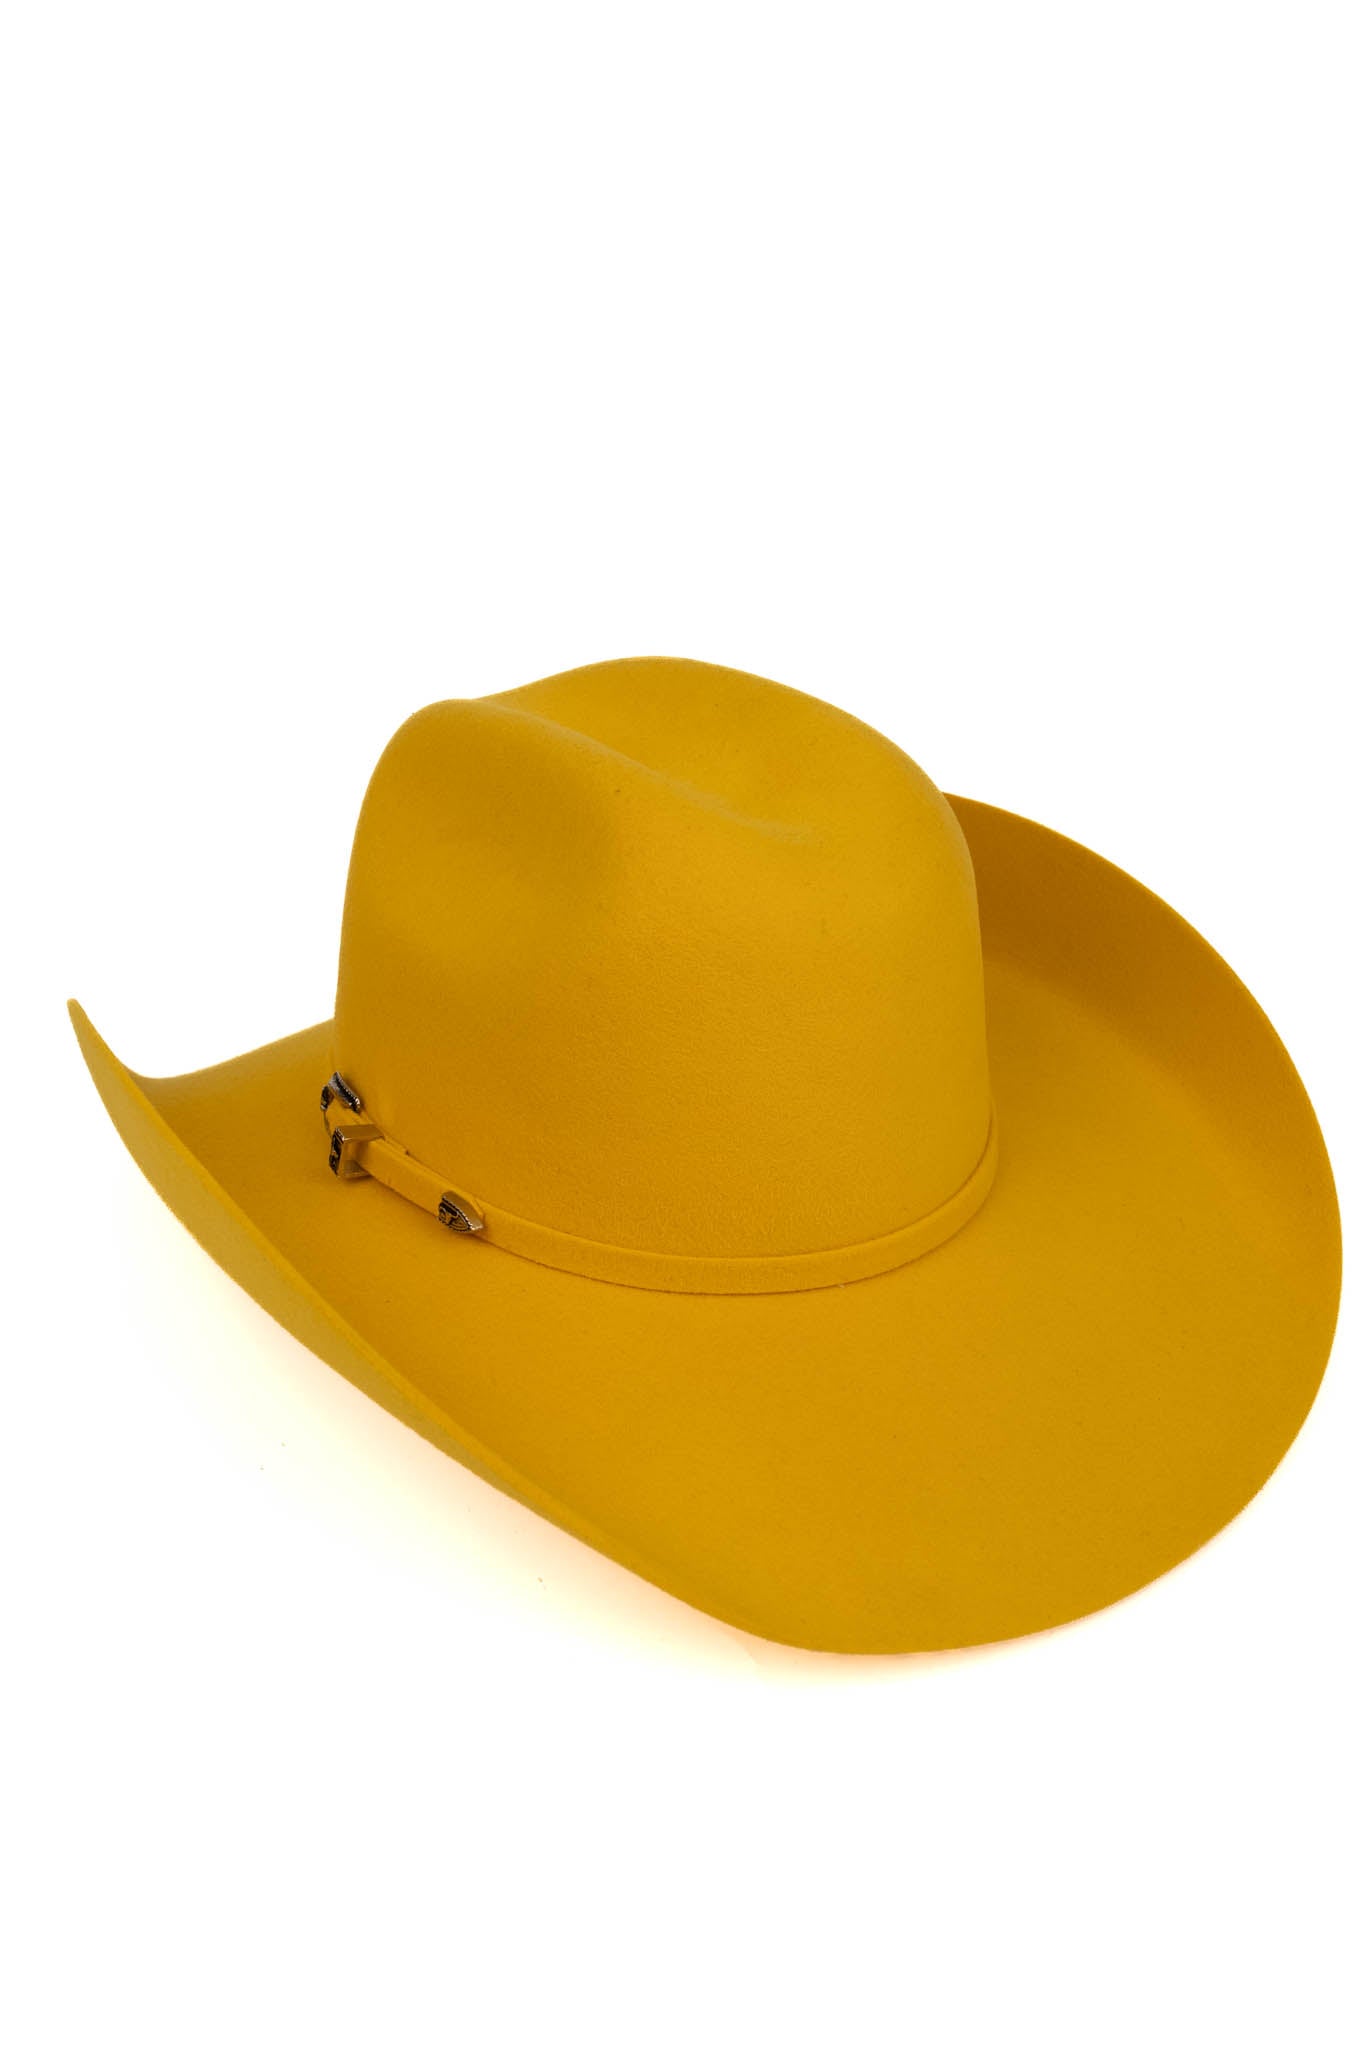 Rock'em Damian 6X Color Edition Felt Hat